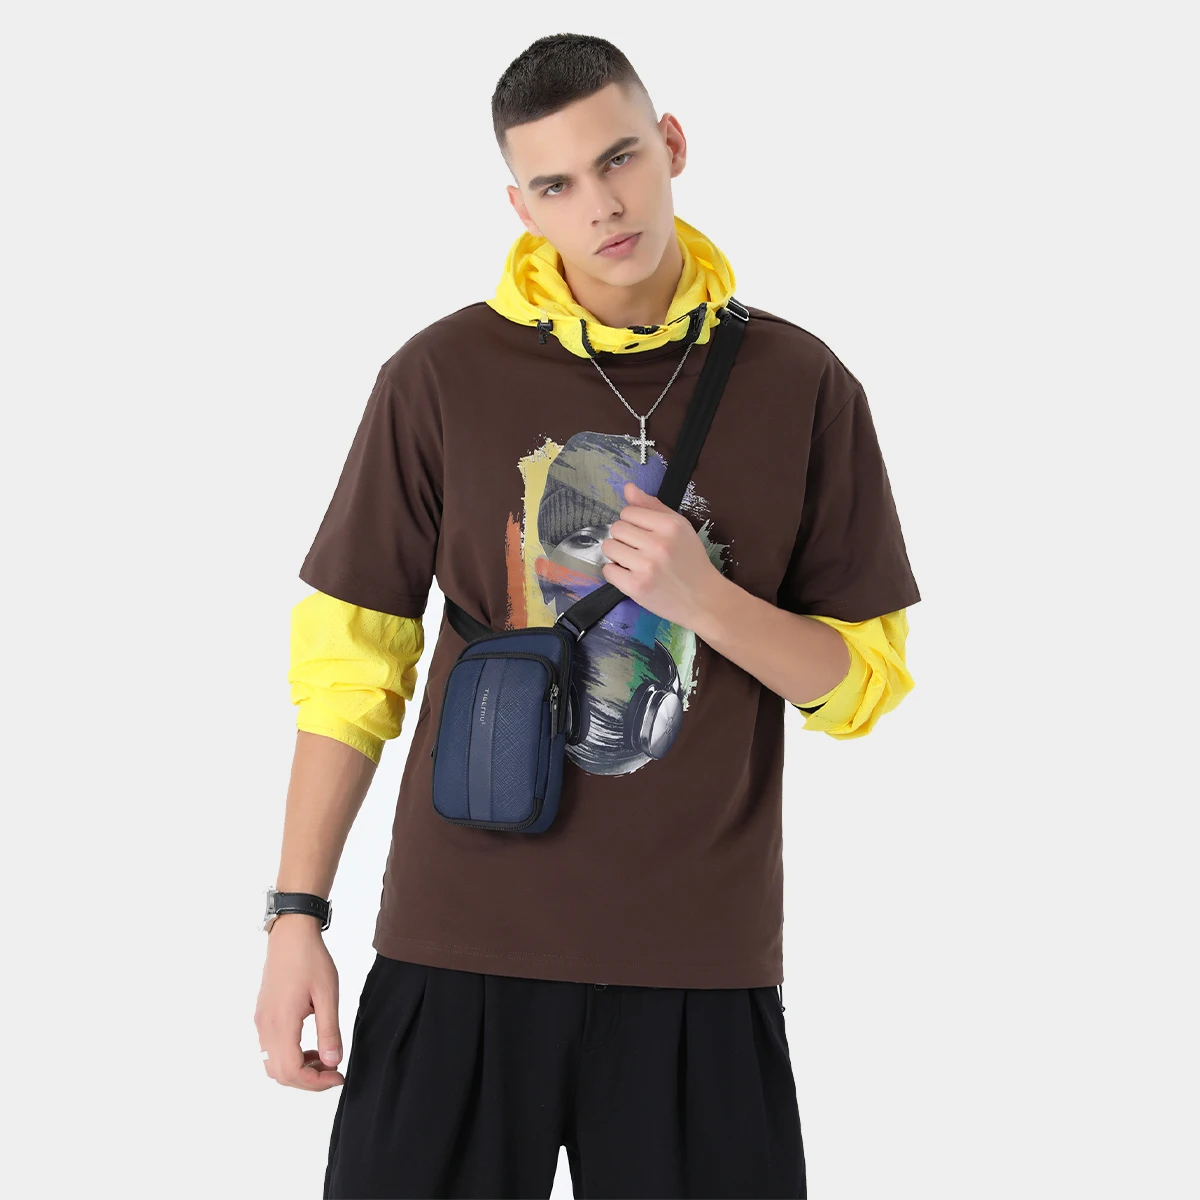 Lifetime Warranty TPU Waterproof Men’s Shoulder Bag Fashion Lightweight Sling Bags Mini Casual Crossing Bag For Phone Banana Bag images - 6